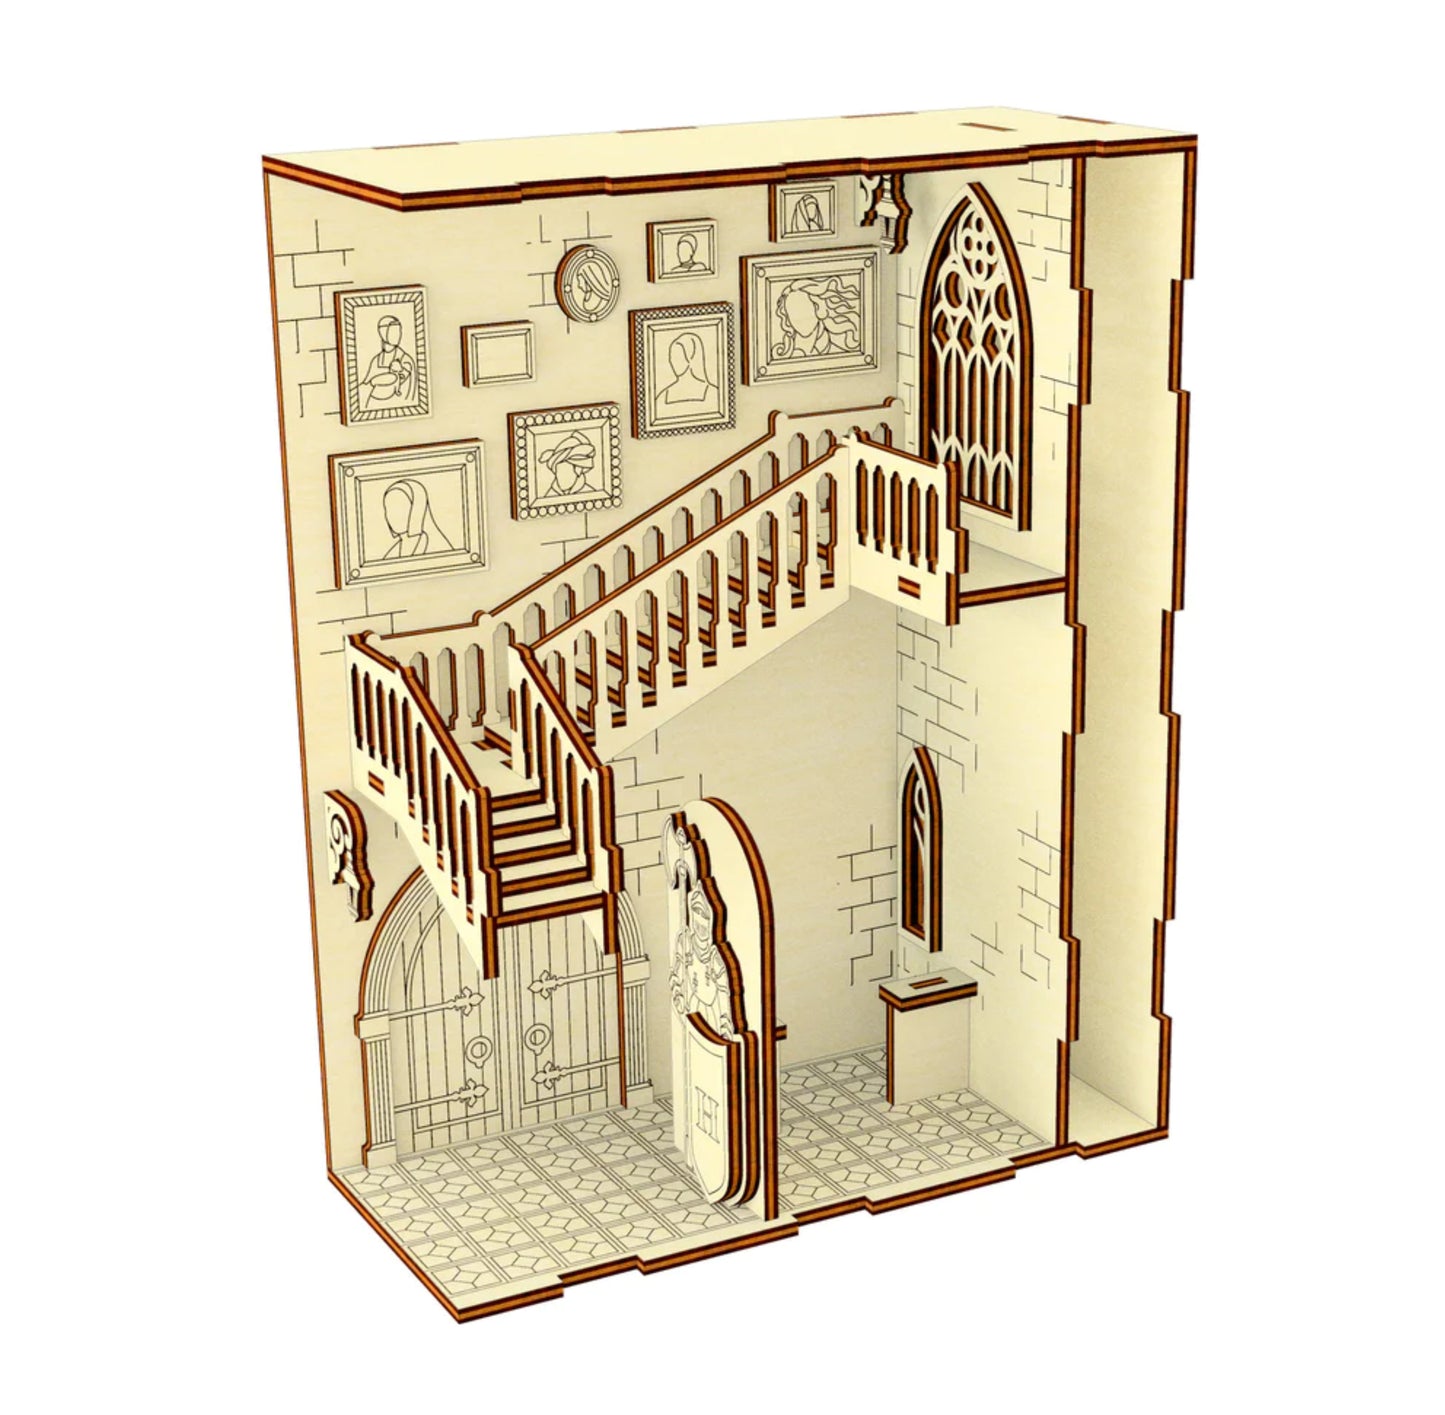 Enchanting Miniature Castle Book Nook for Your Bookshelf